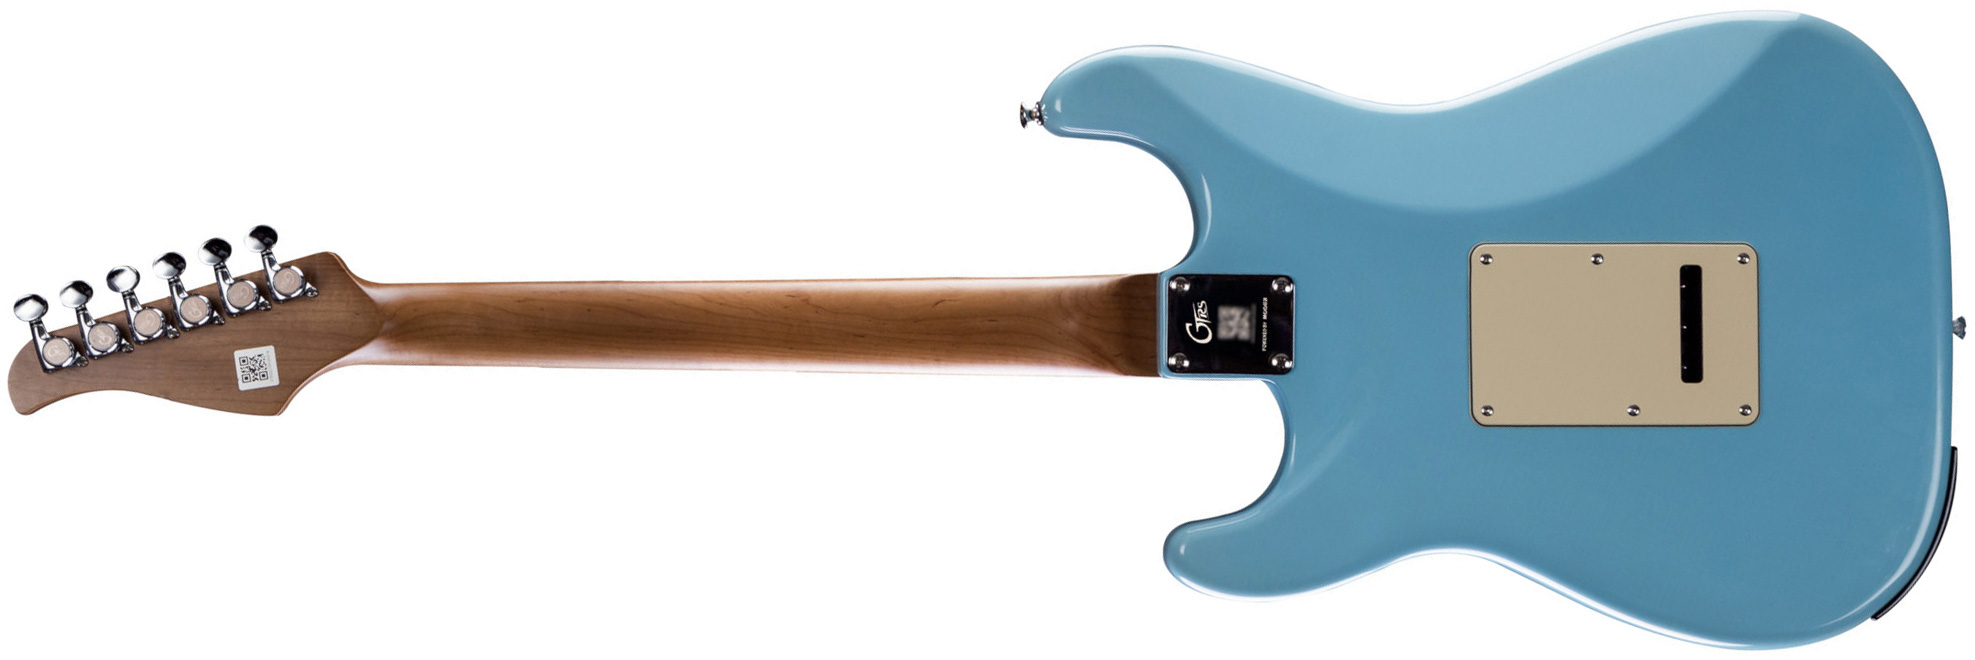 Mooer Gtrs P800 Pro Intelligent Guitar Hss Trem Rw - Tiffany Blue - Guitarra eléctrica de modelización - Variation 1